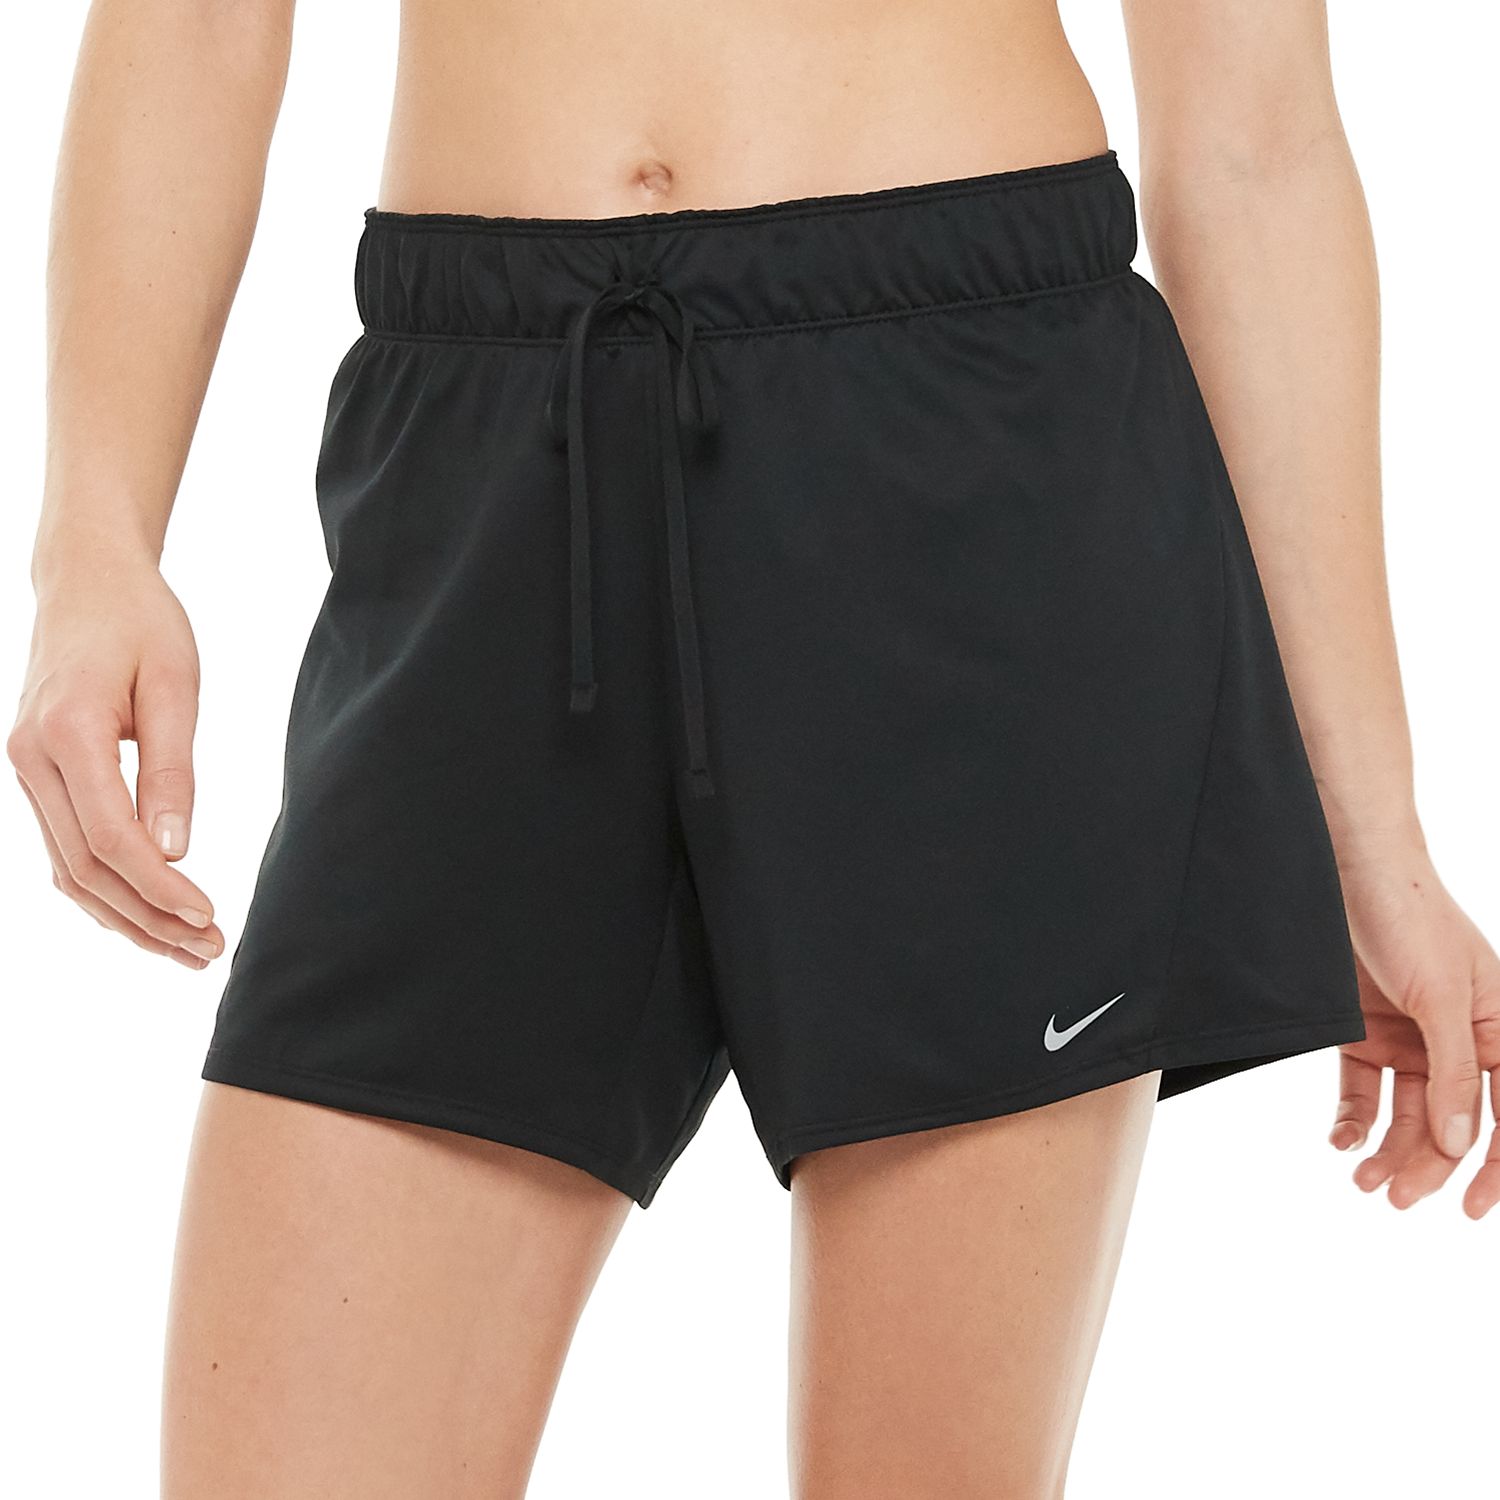 nike shorts women's dri fit